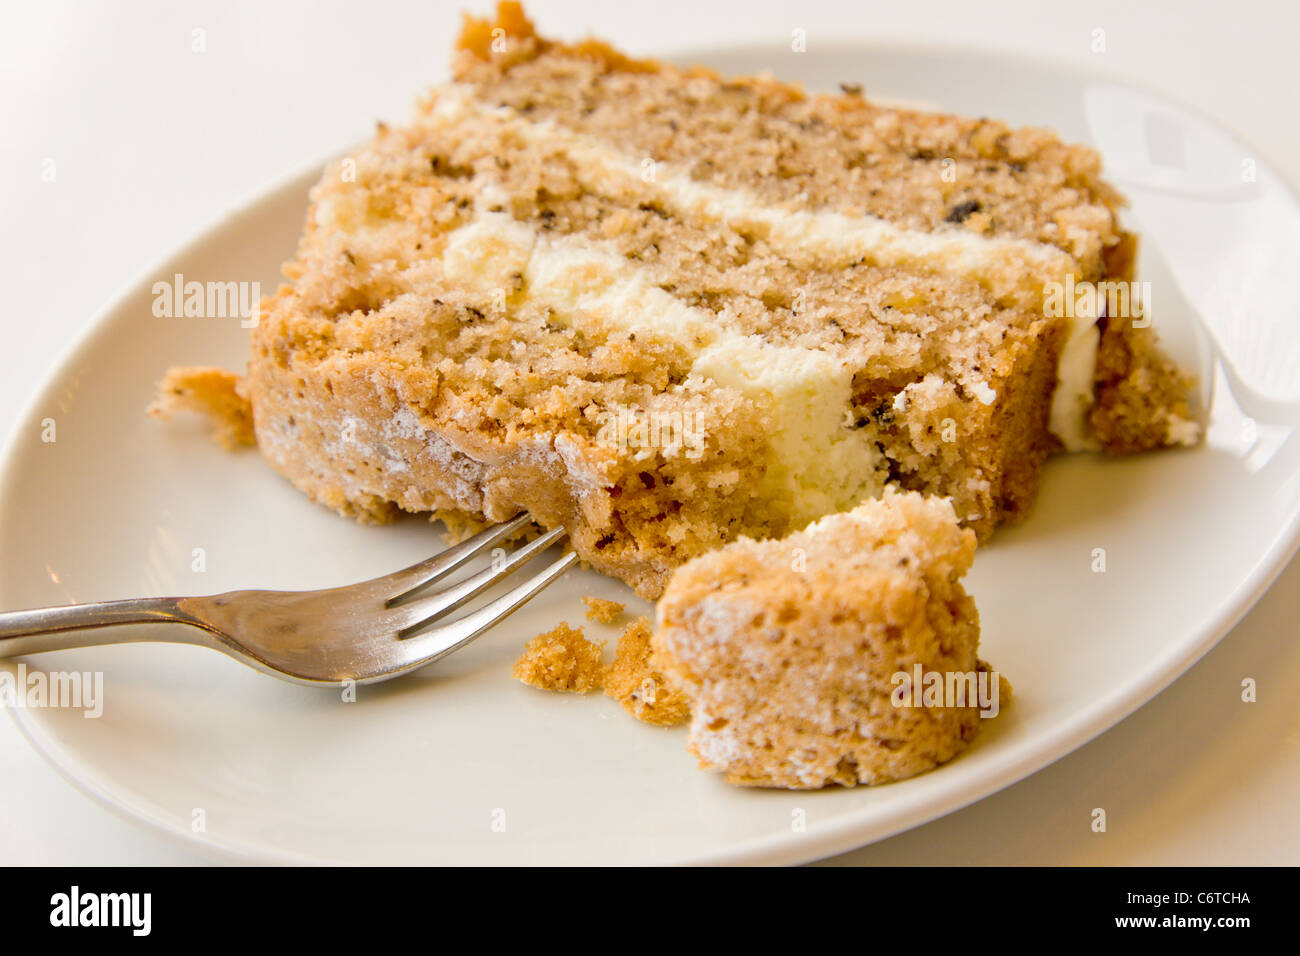 Walnut cake on plate Stock Photo